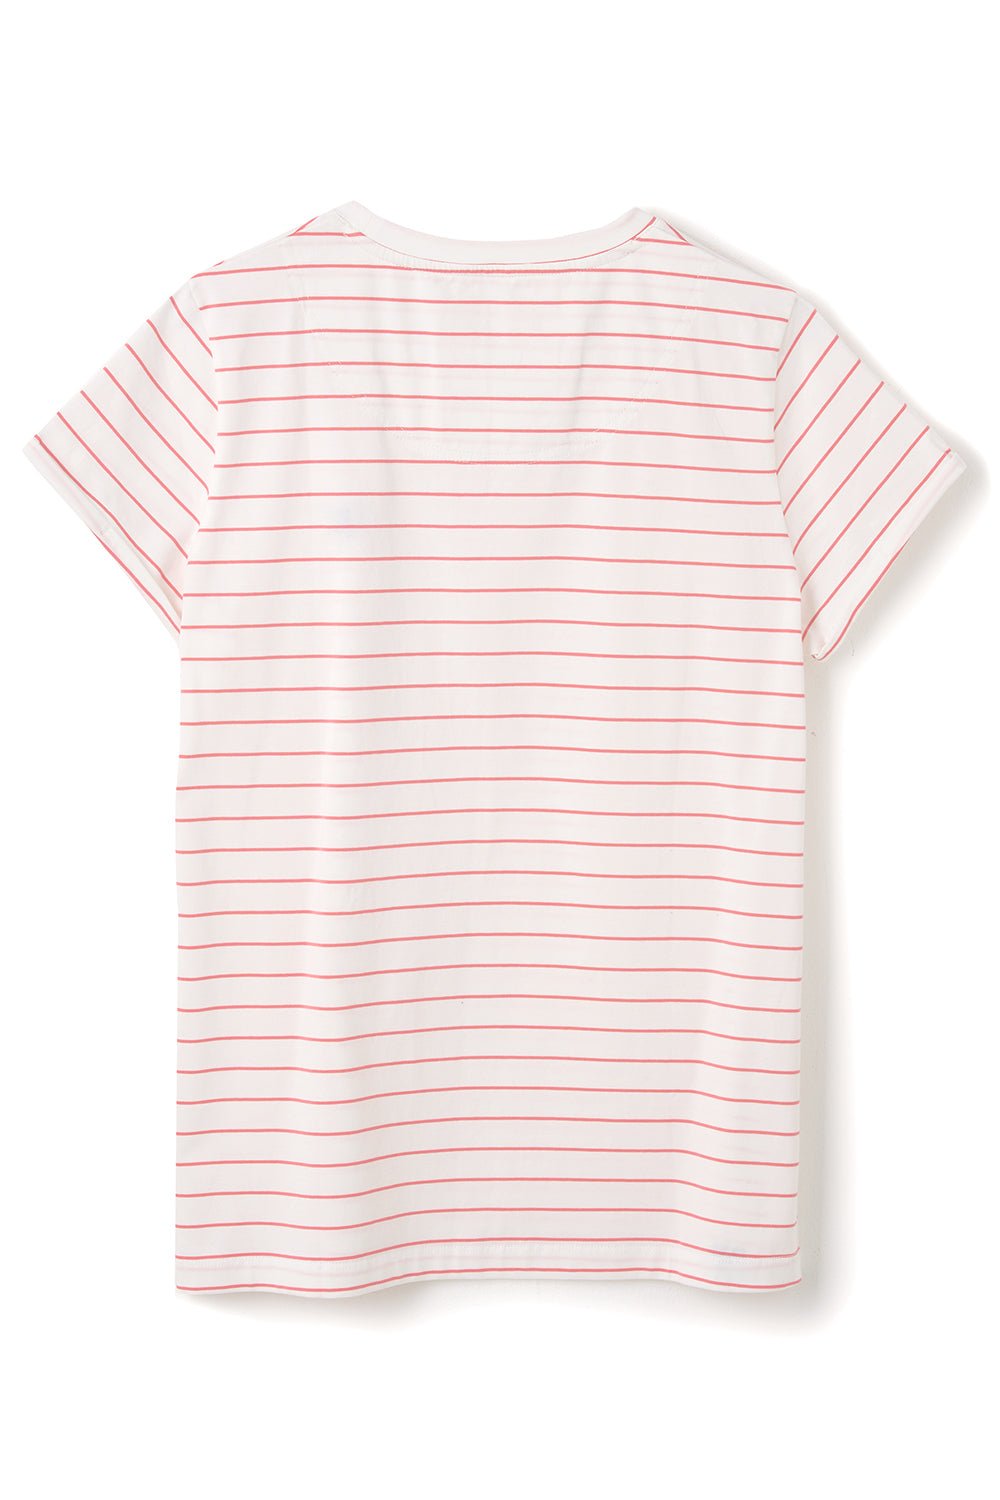 Seashore T Shirt - Cloud Pink Stripe